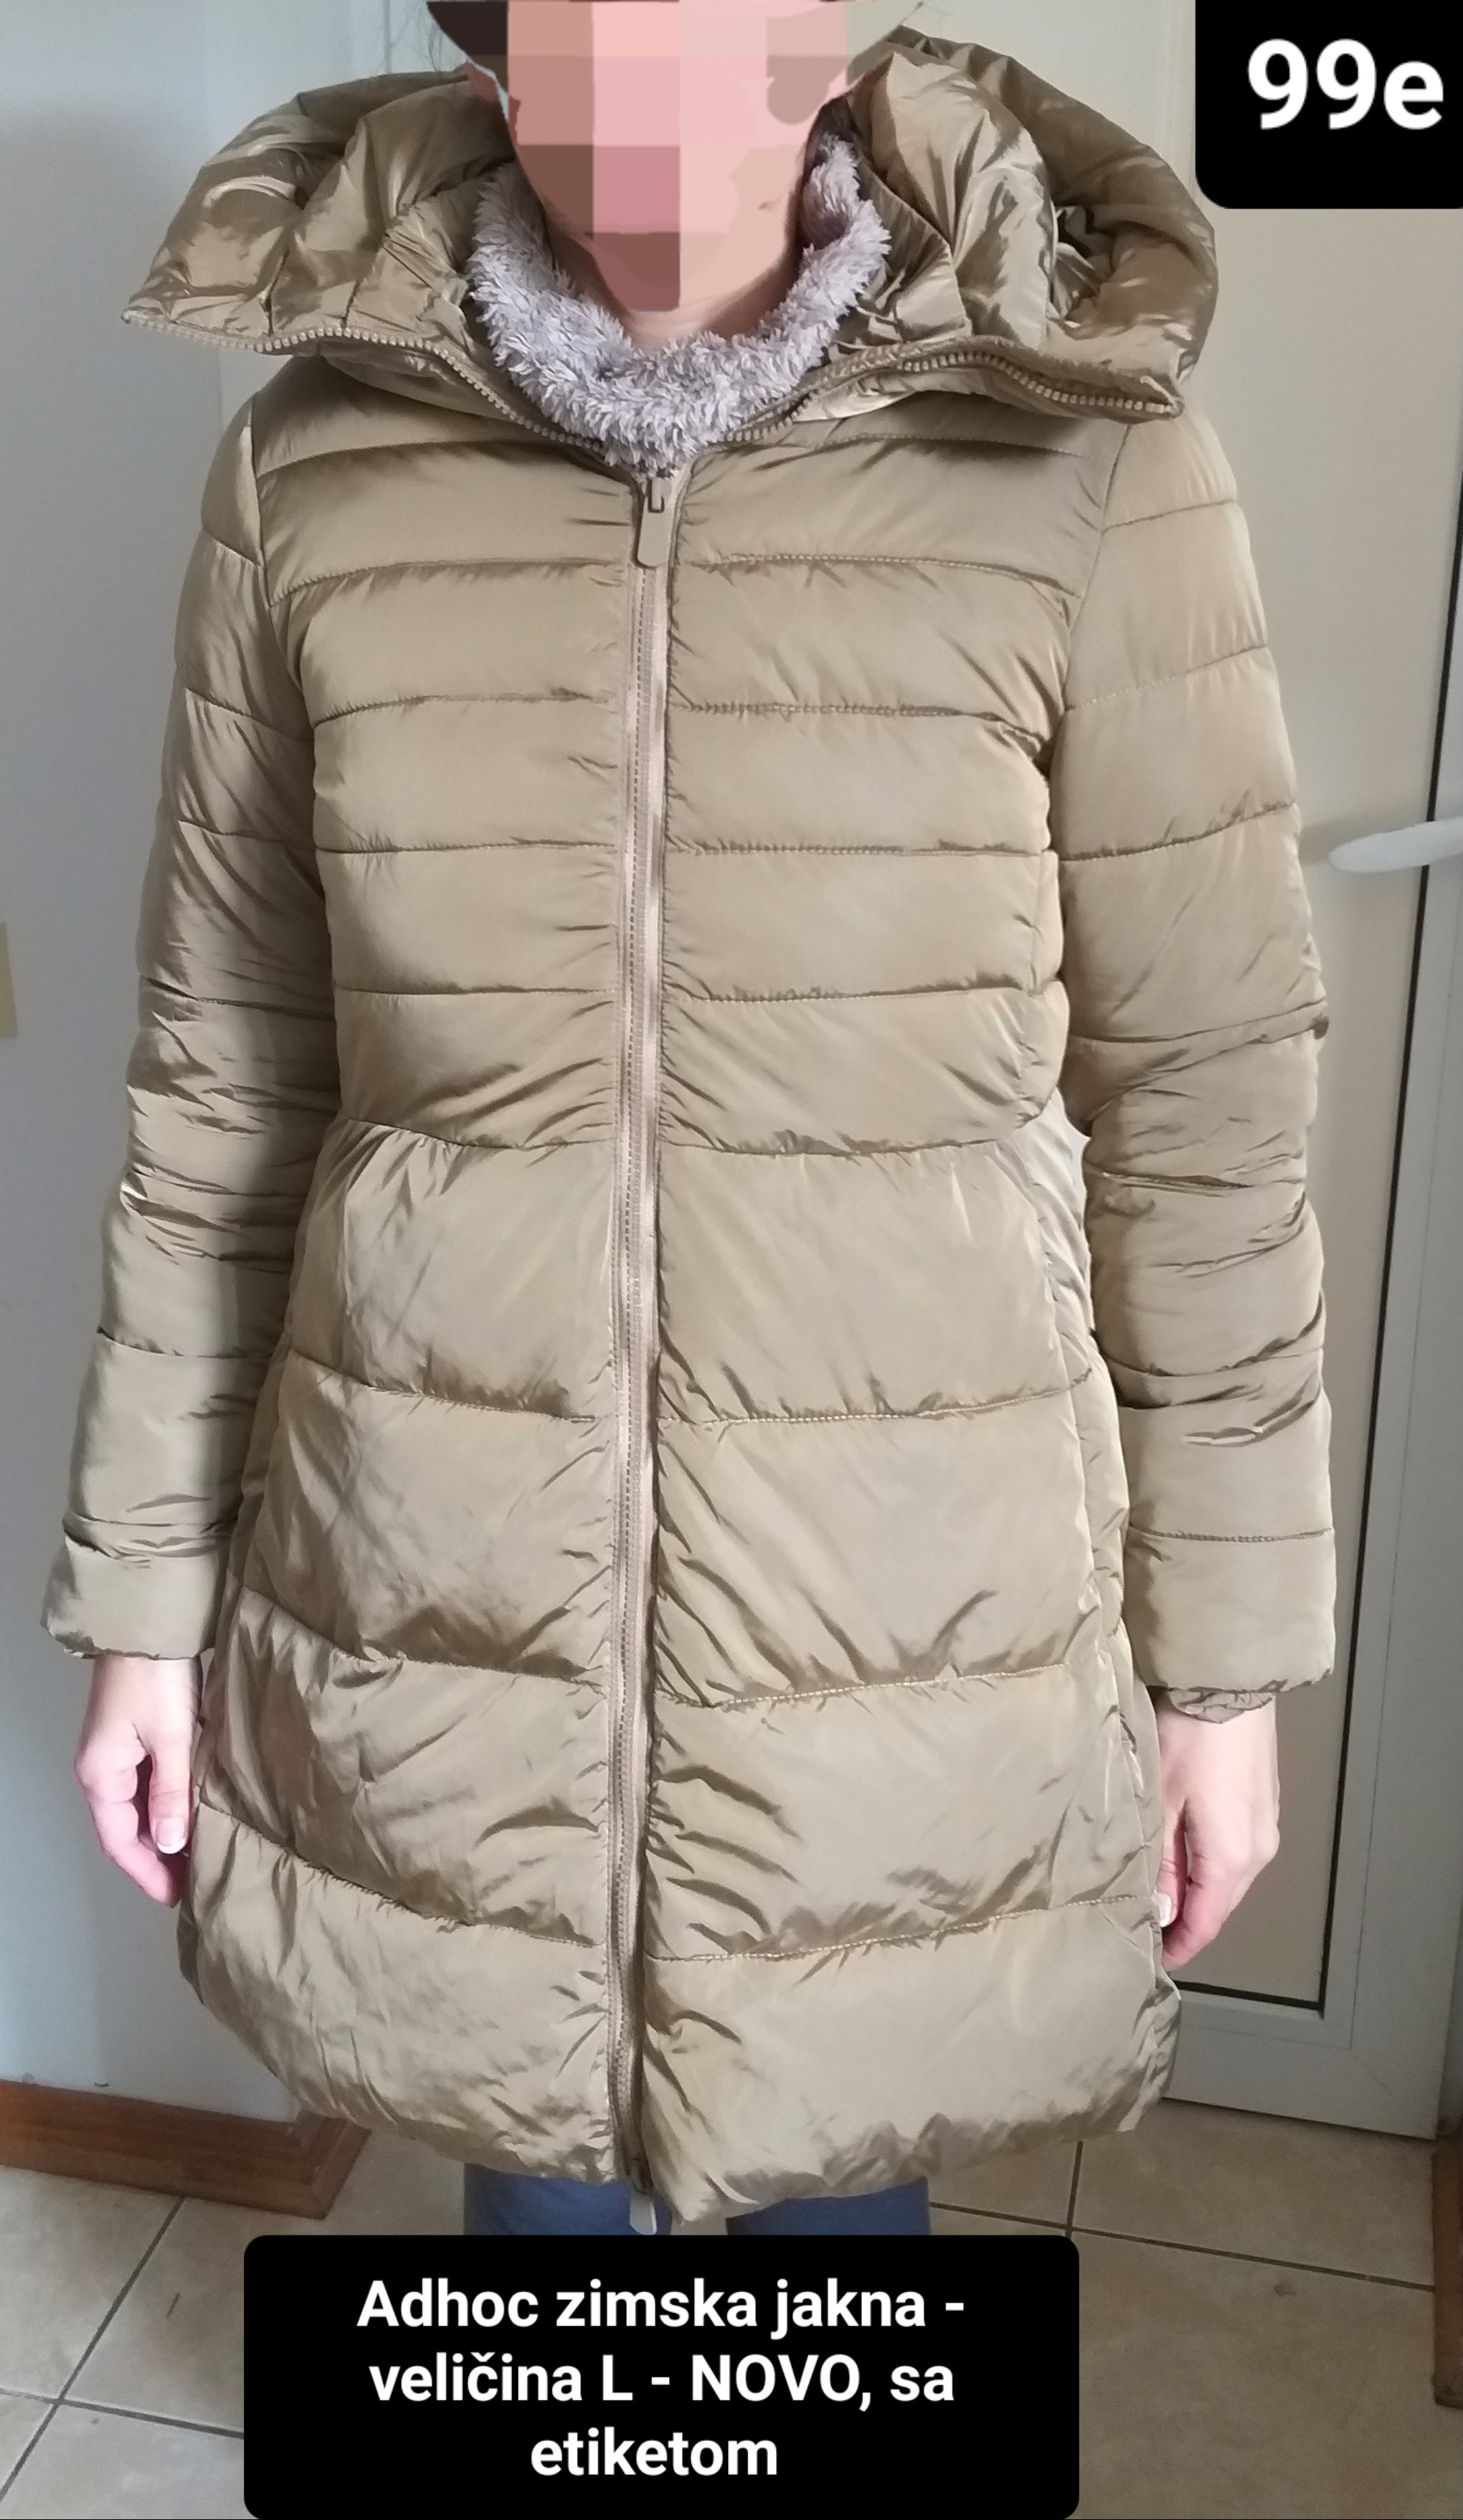 Adhoc kvalitetna zimska 420e jakna L/40 - NOVO